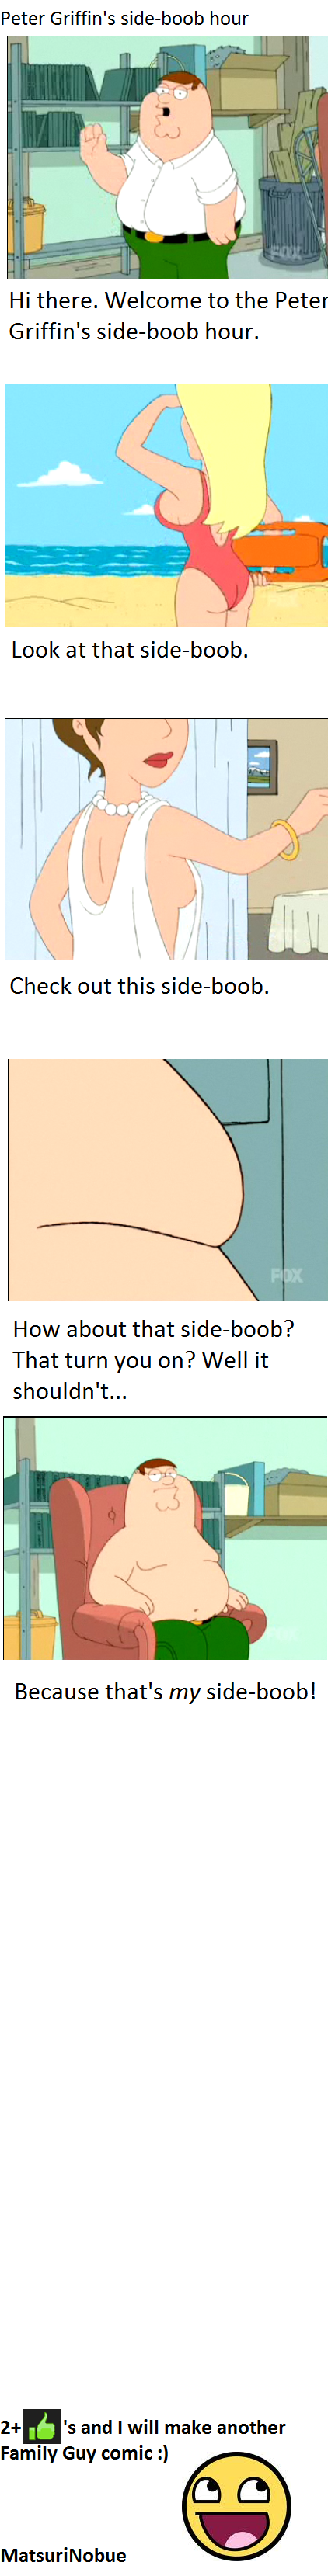 griffin-side-boob